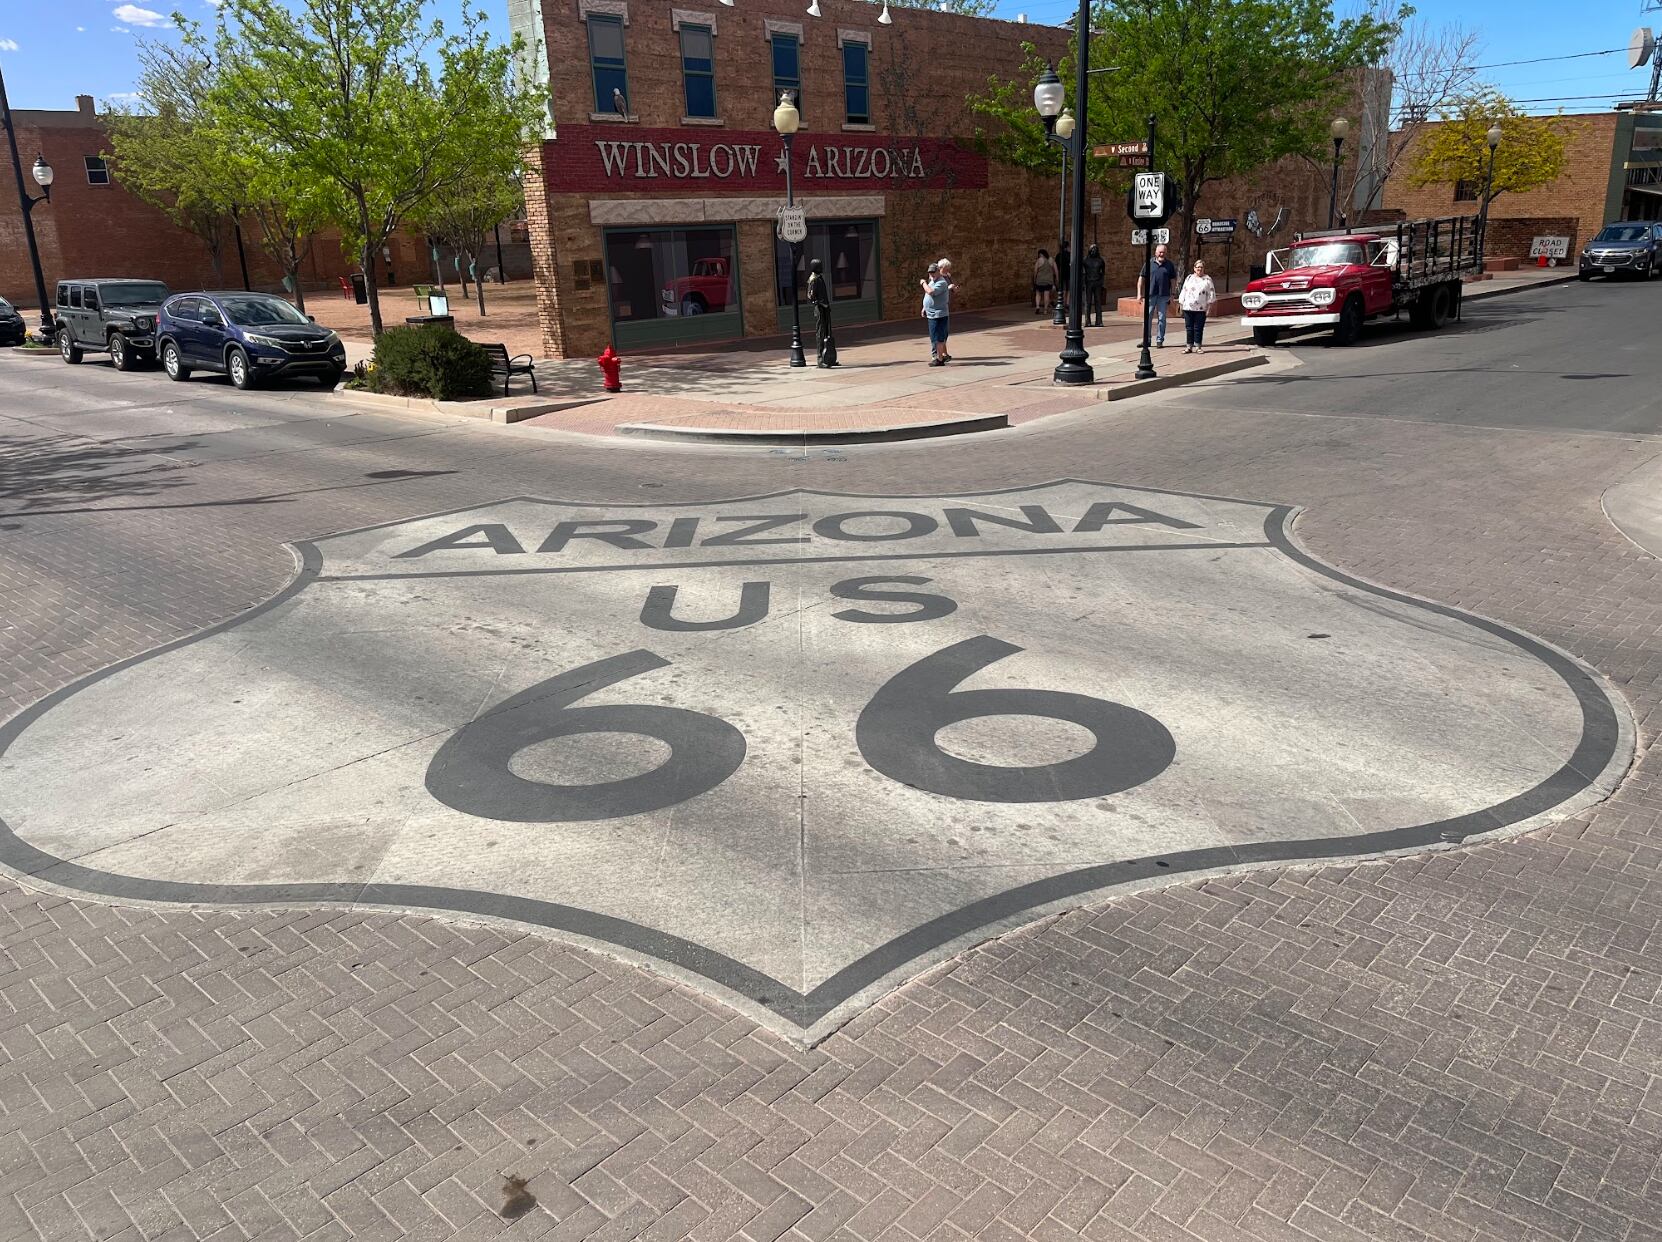 A massive Route 66 shield in Winslow, AZ